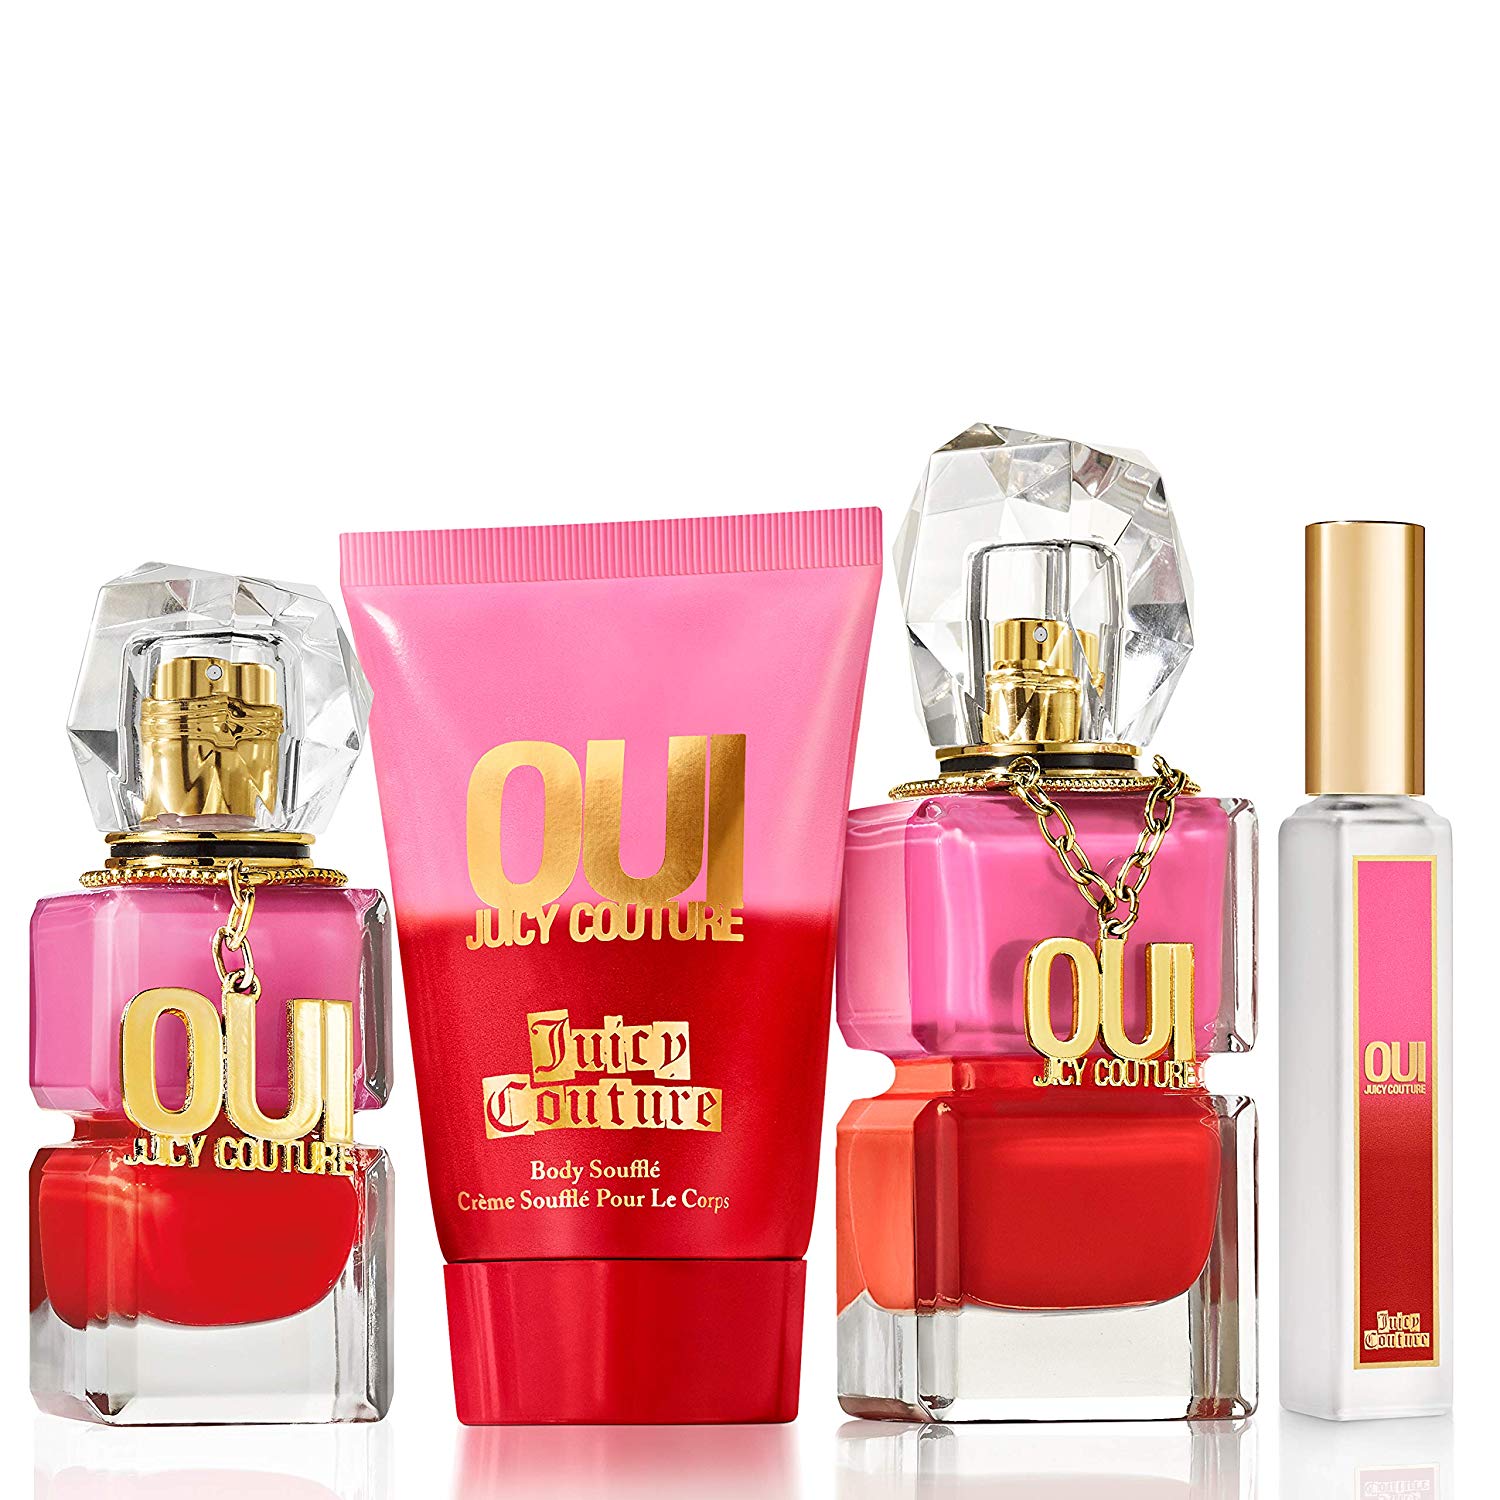 Juicy Couture Oui Glow Perfume